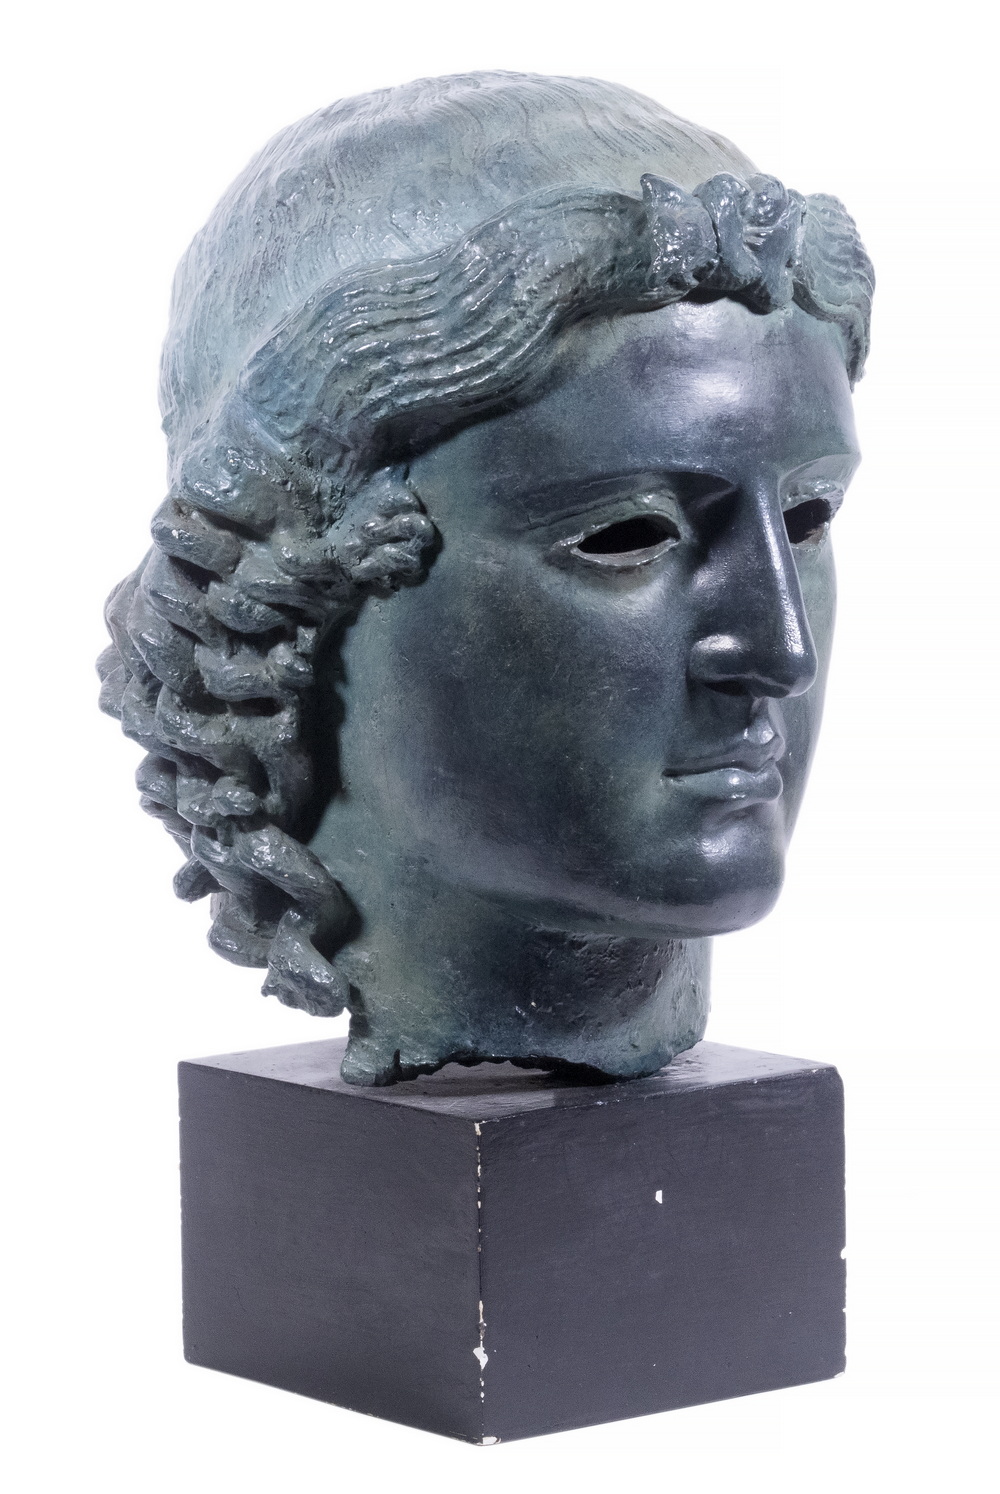 MUSEUM REPLICA OF AN ANCIENT GREEK HEAD